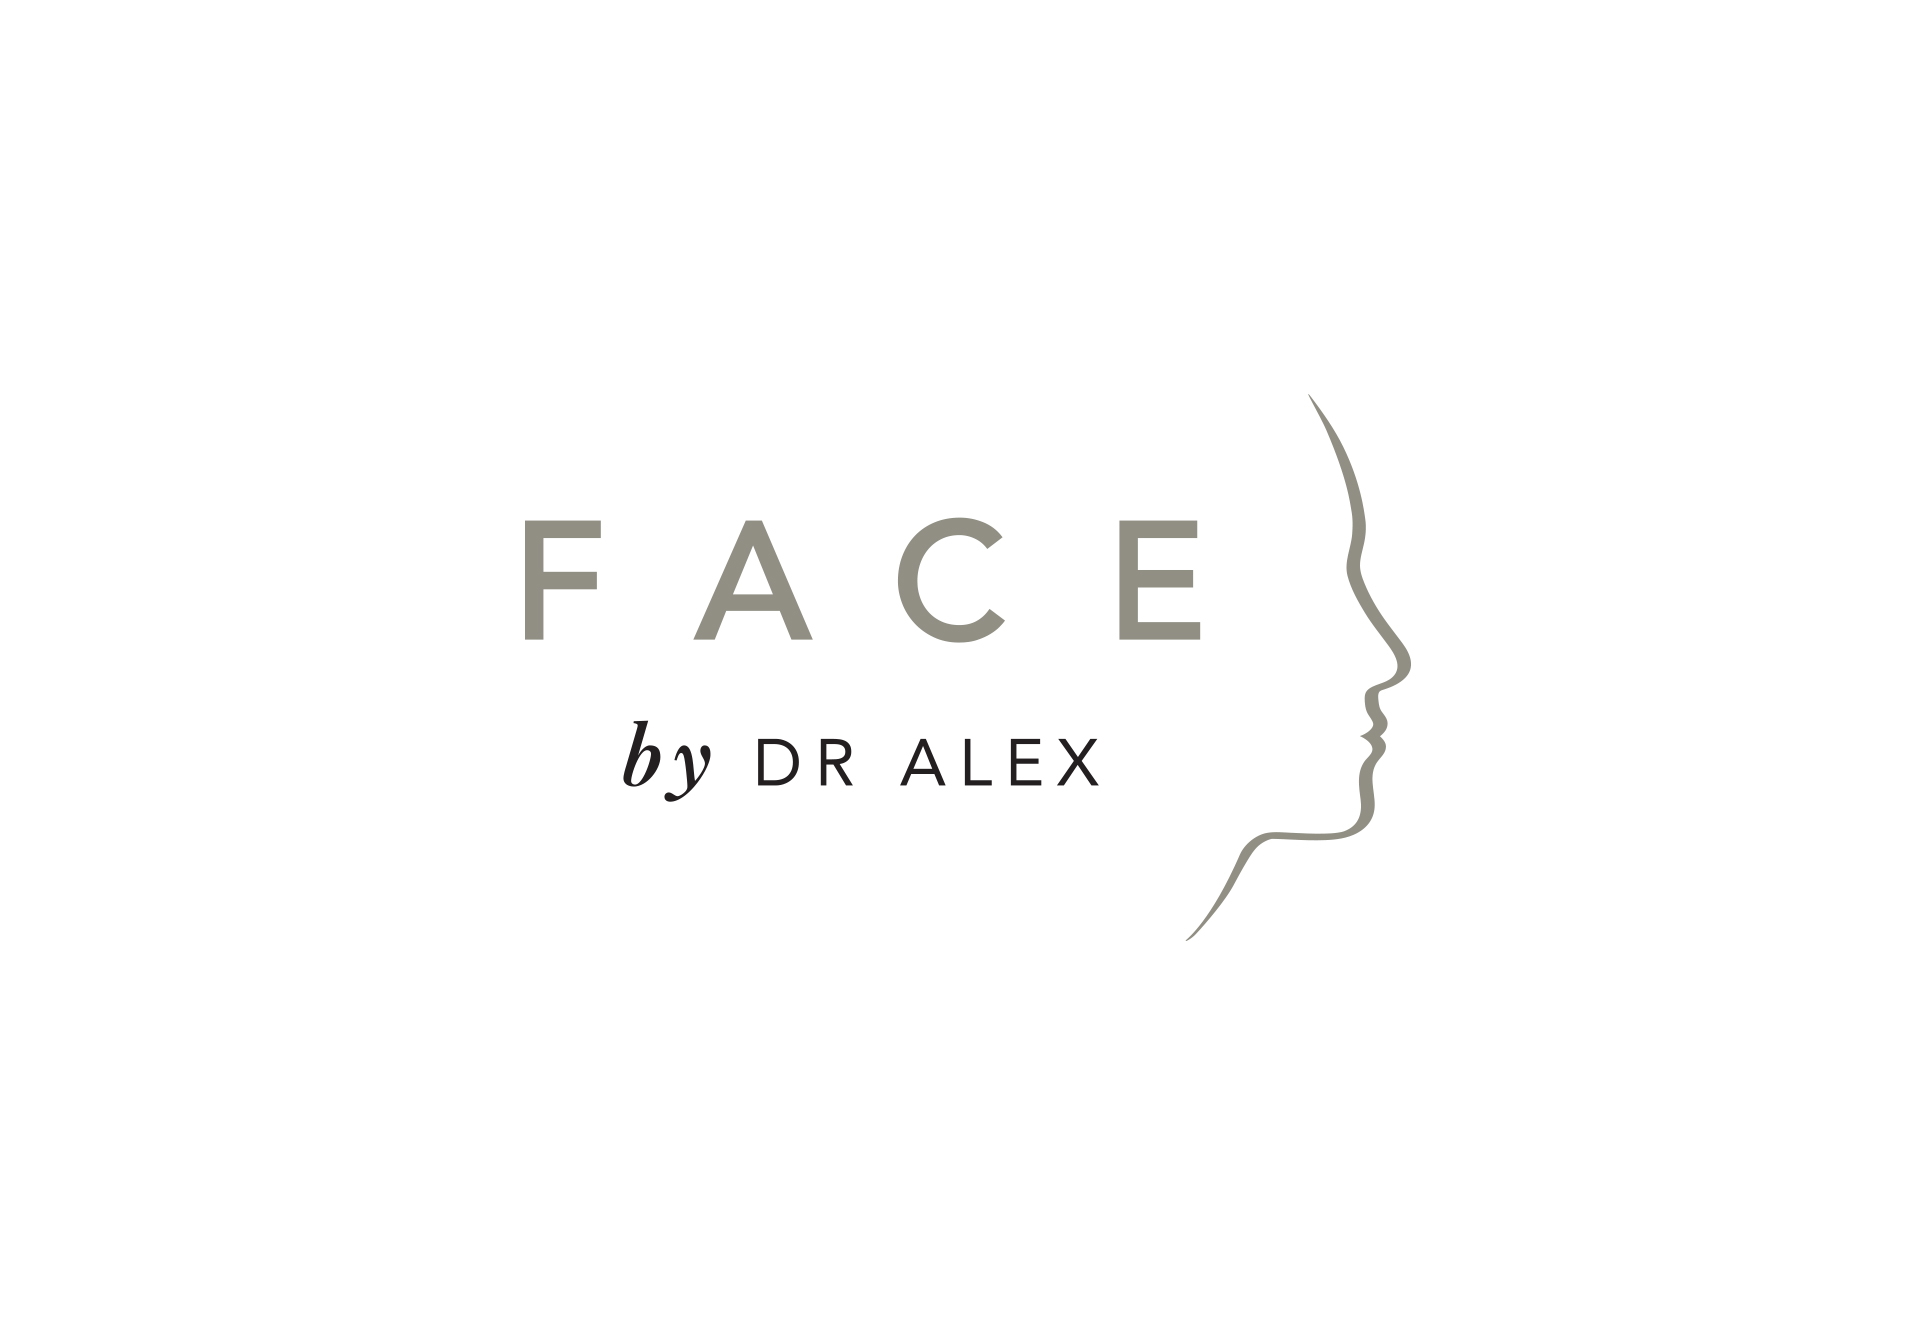 Face by Dr Alex - Stream Art Design